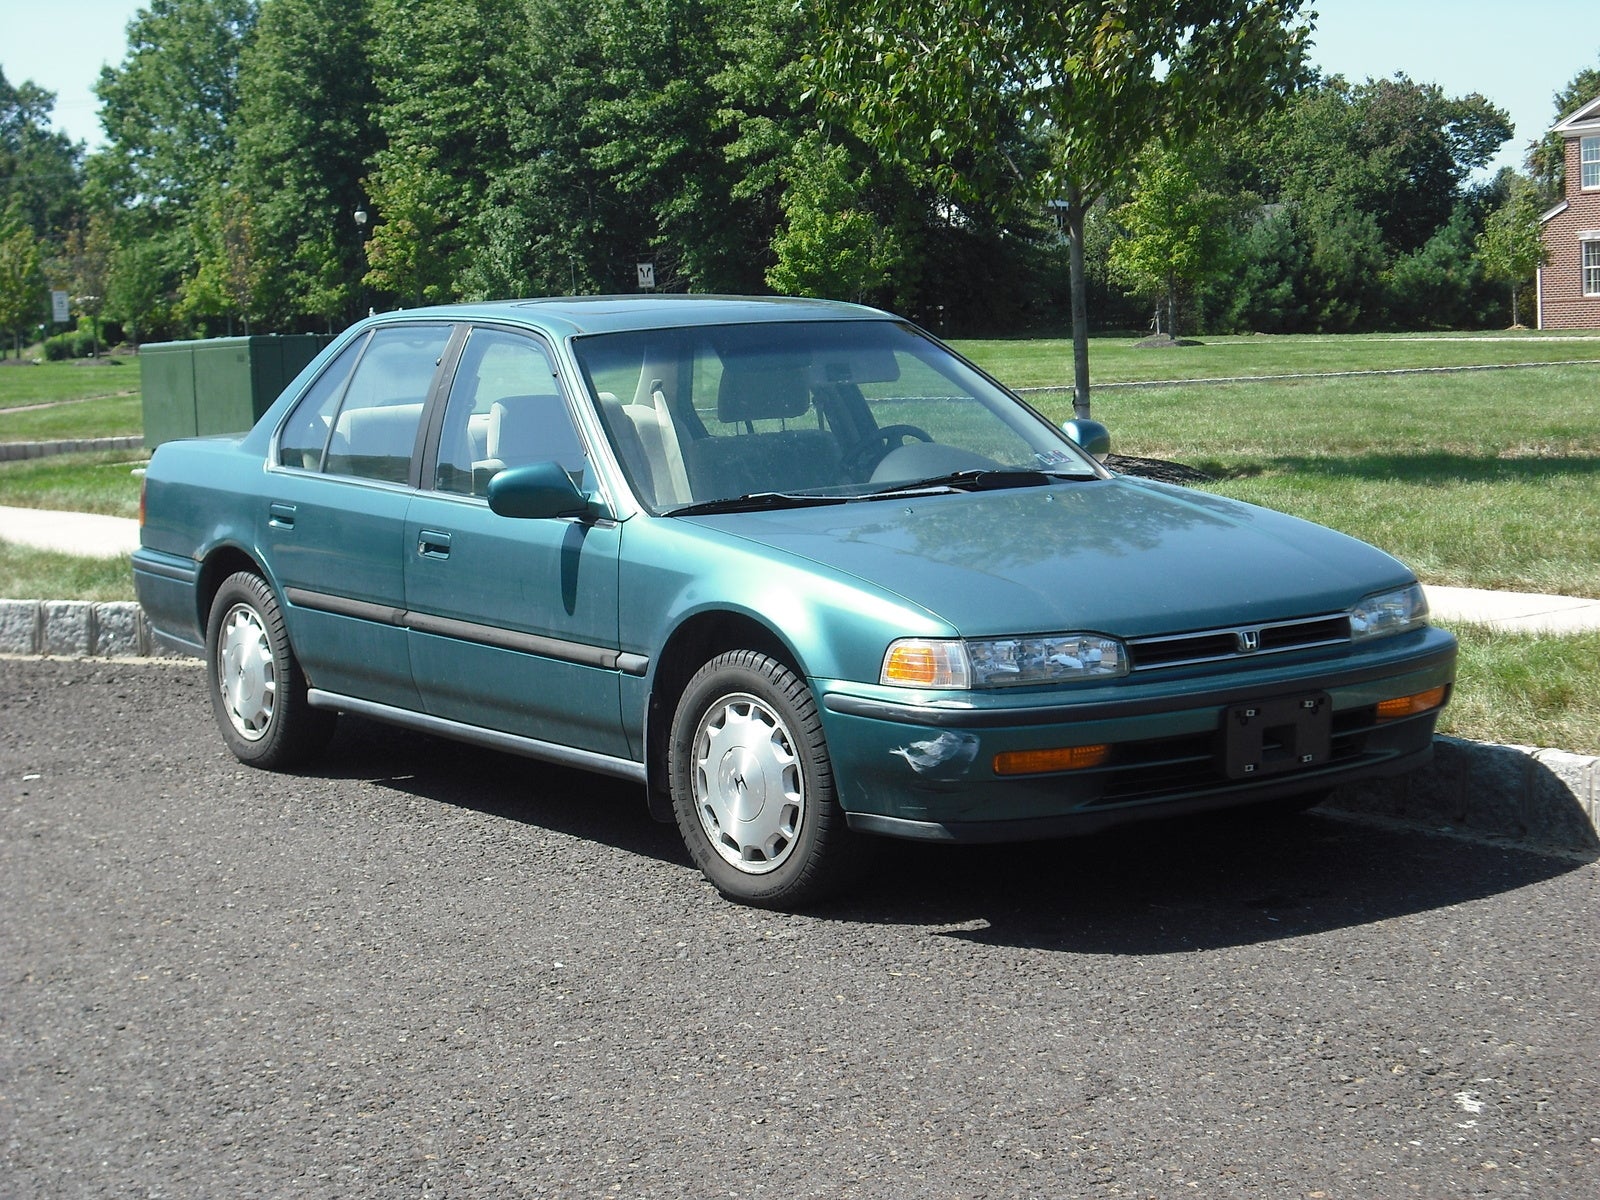 1993 Honda Accord Test Drive Review CarGurus